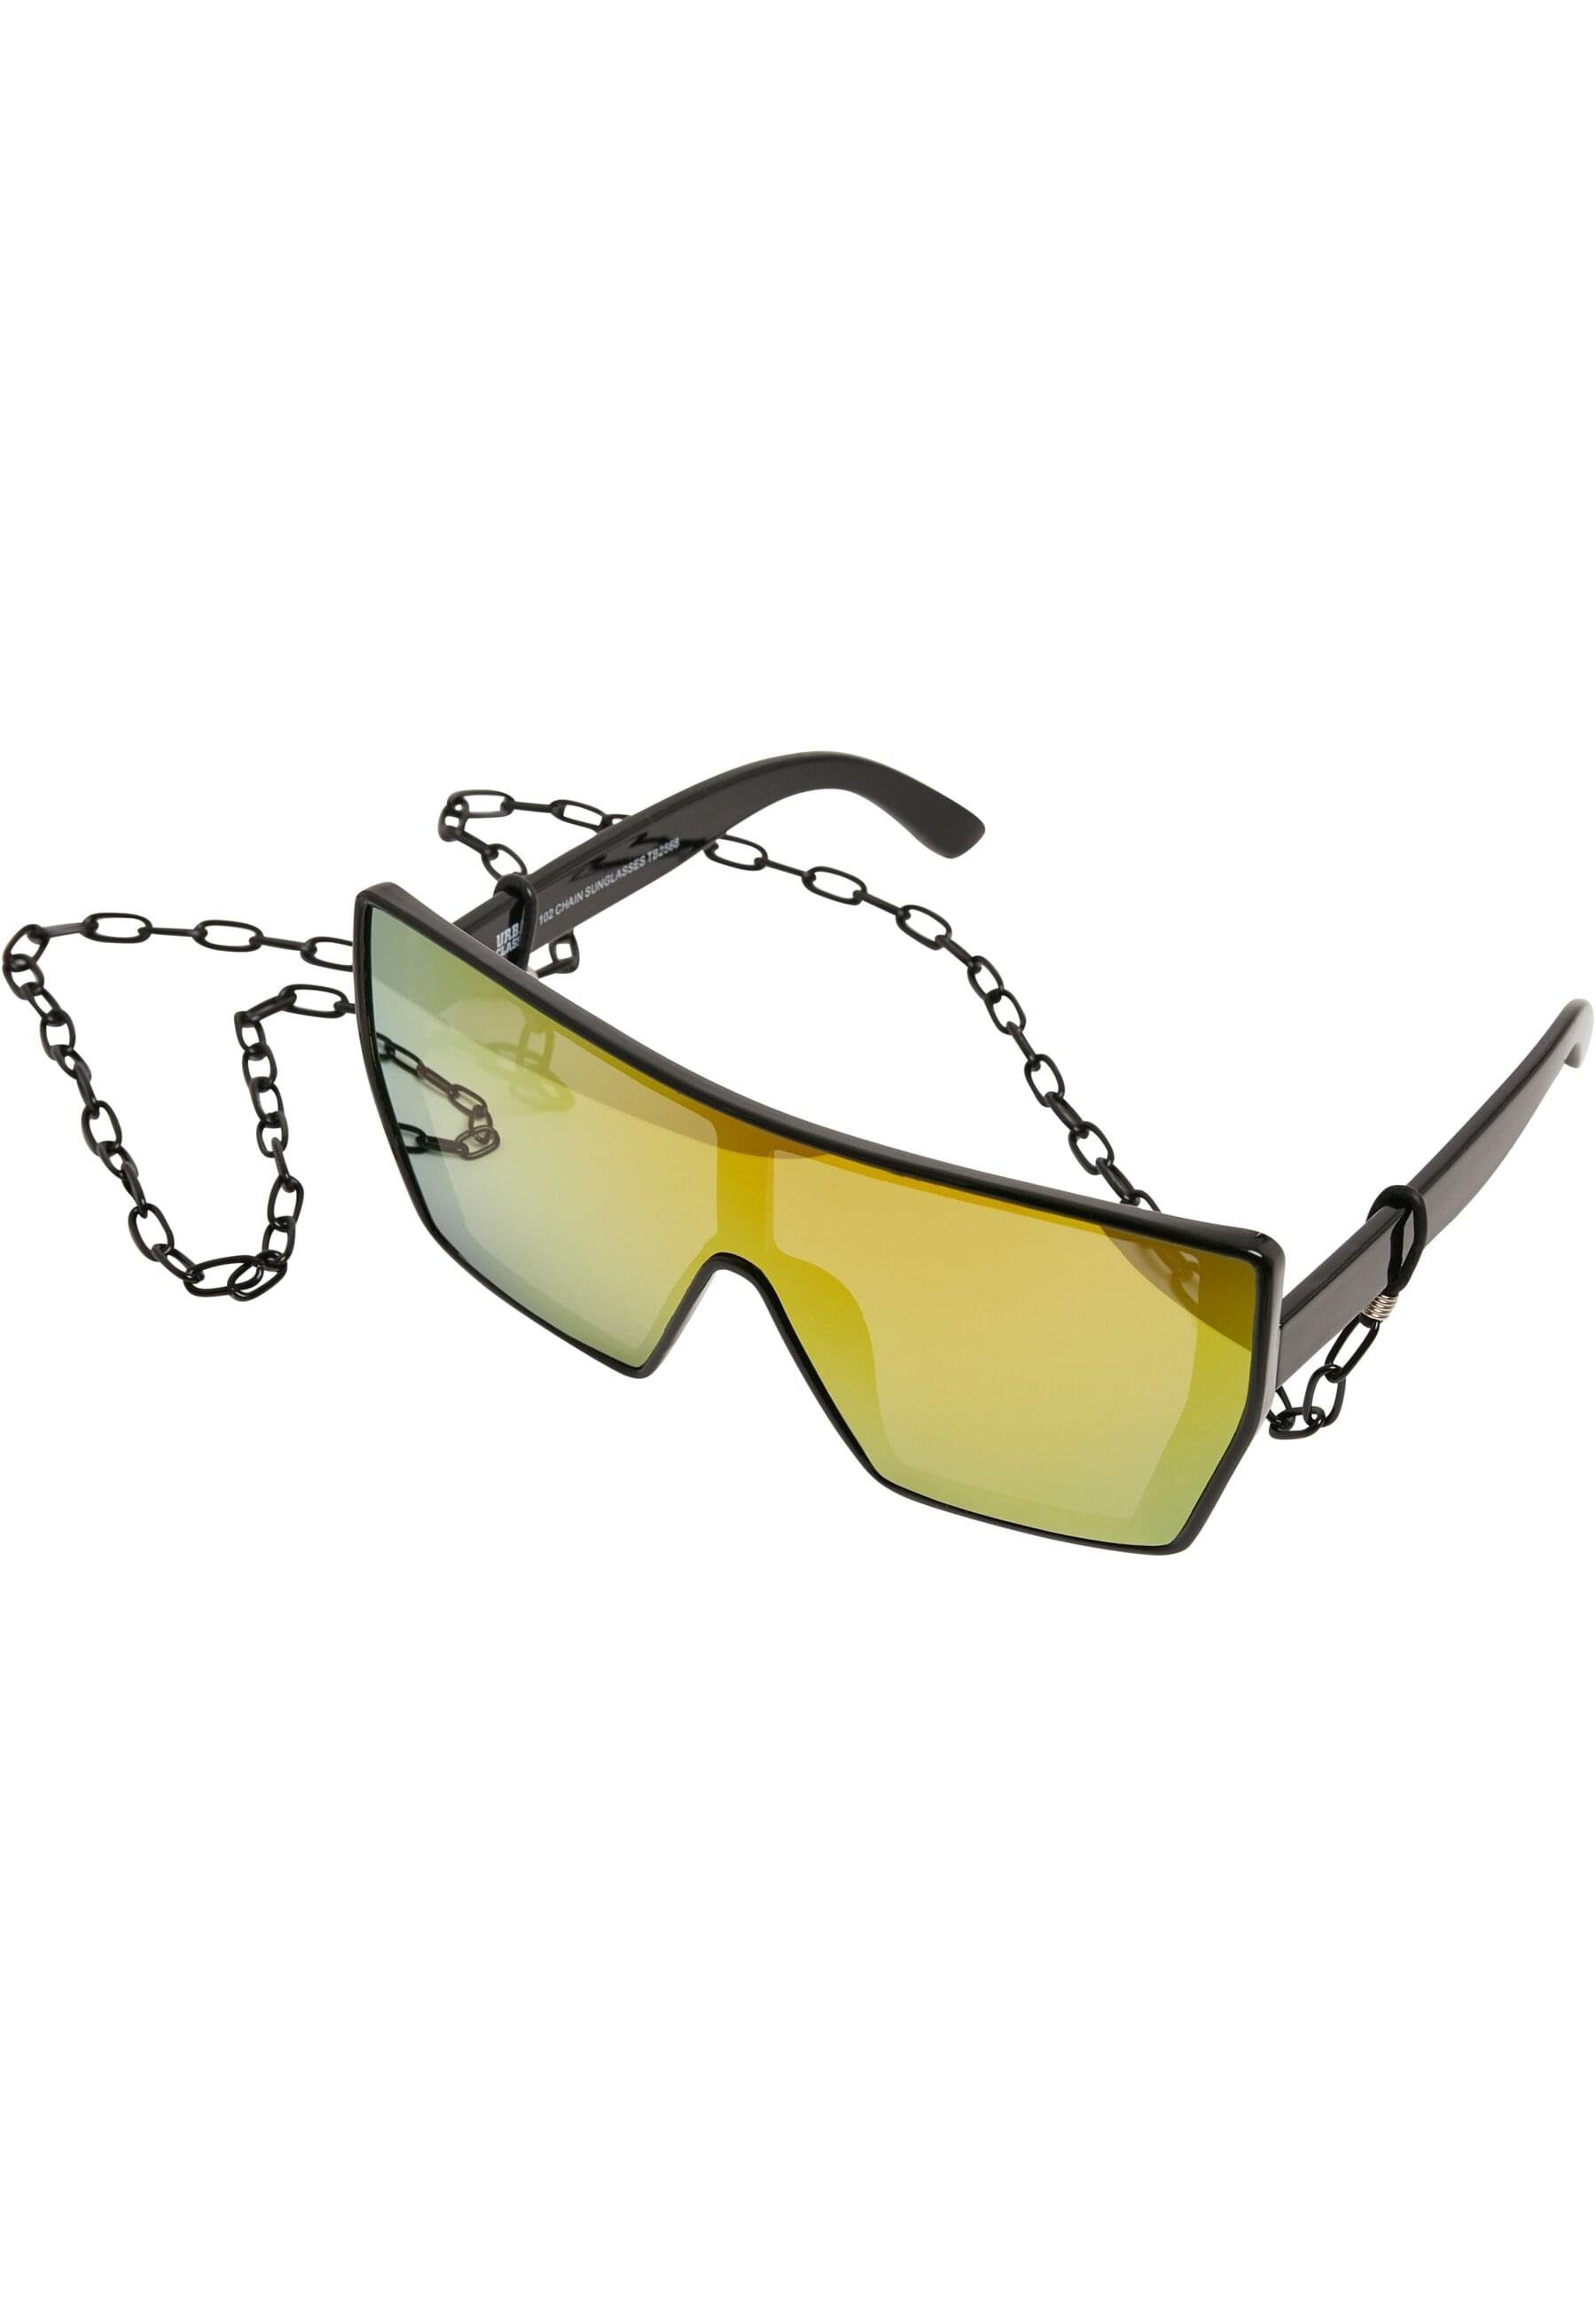 Sunglasses Chain URBAN 102 TB2568 102 Chain CLASSICS Unisex Sonnenbrille blk/yellow